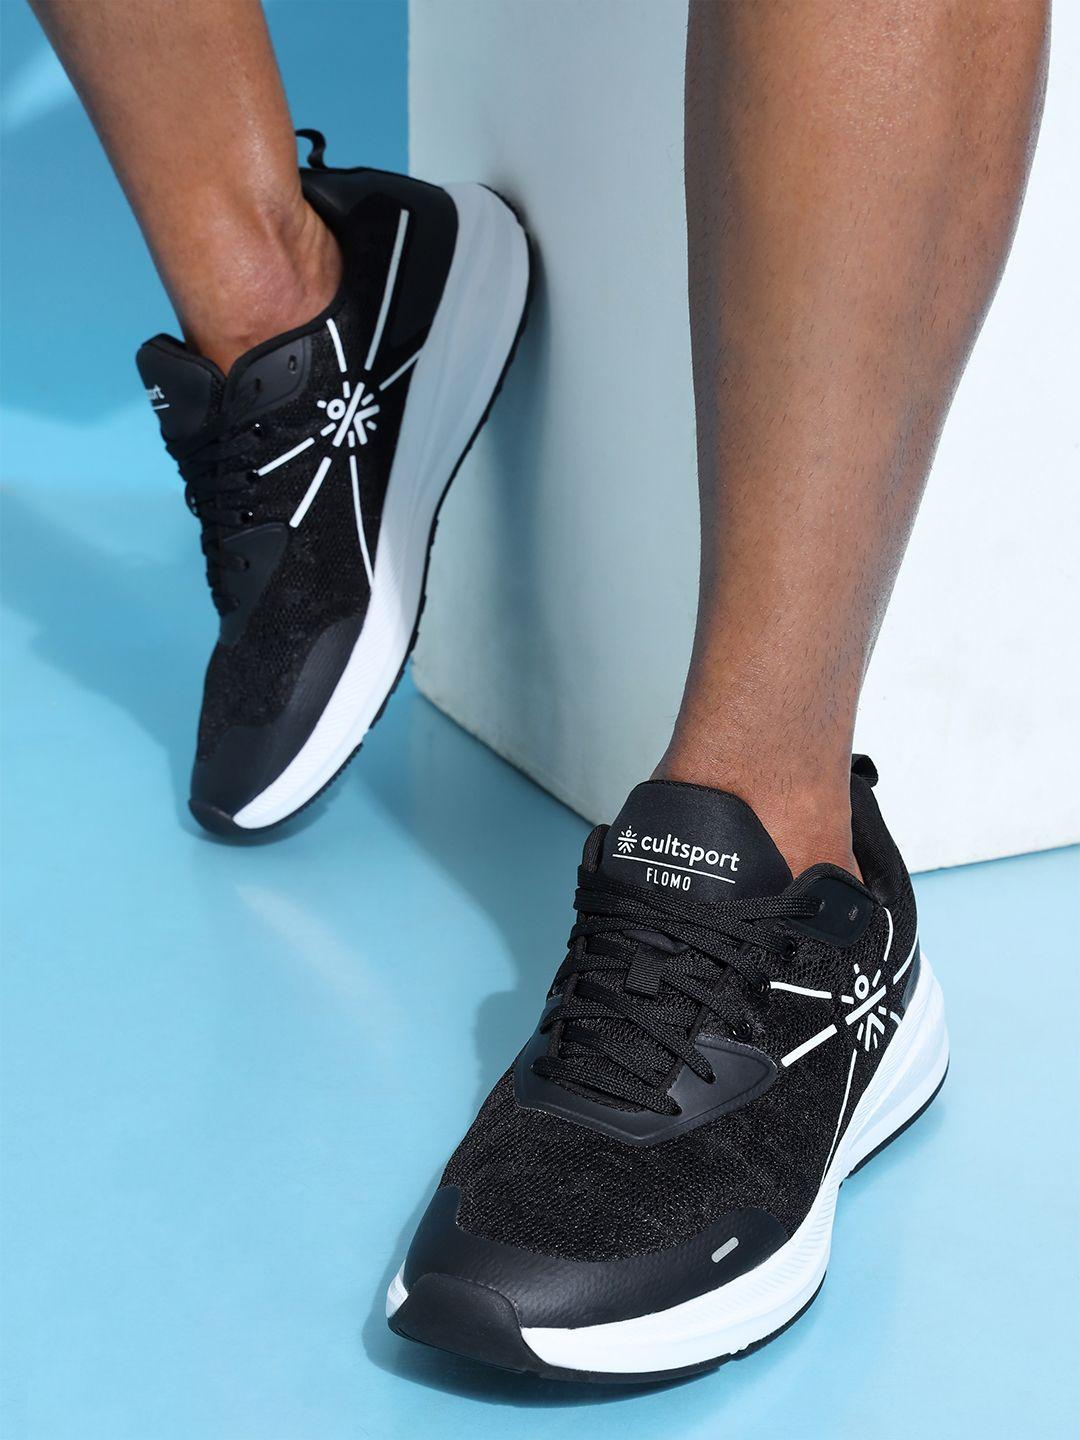 cultsport-flomo-men-brand-logo-printed-running-sports-shoes